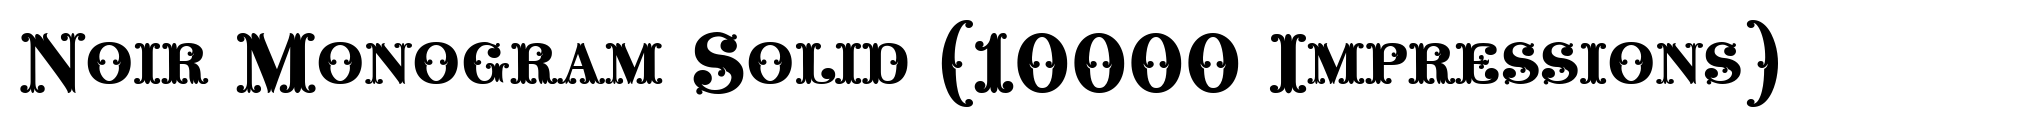 Noir Monogram Solid (10000 Impressions) image